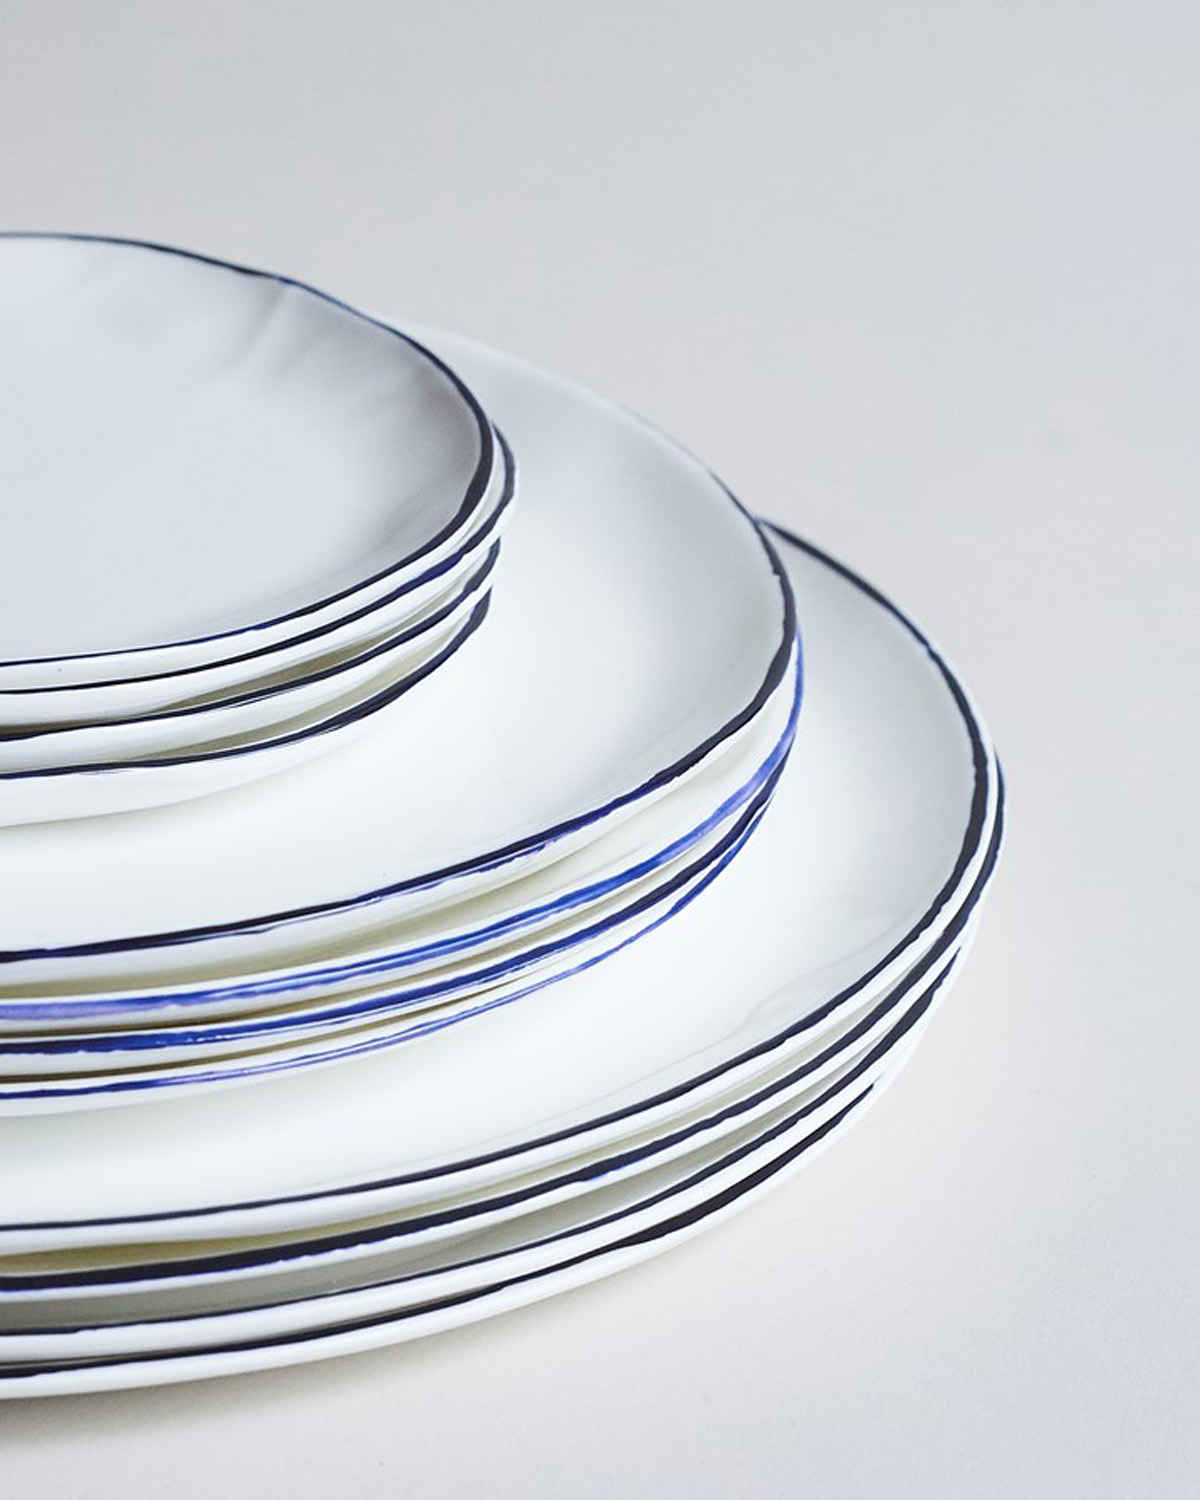 Plate edges by Feldspar